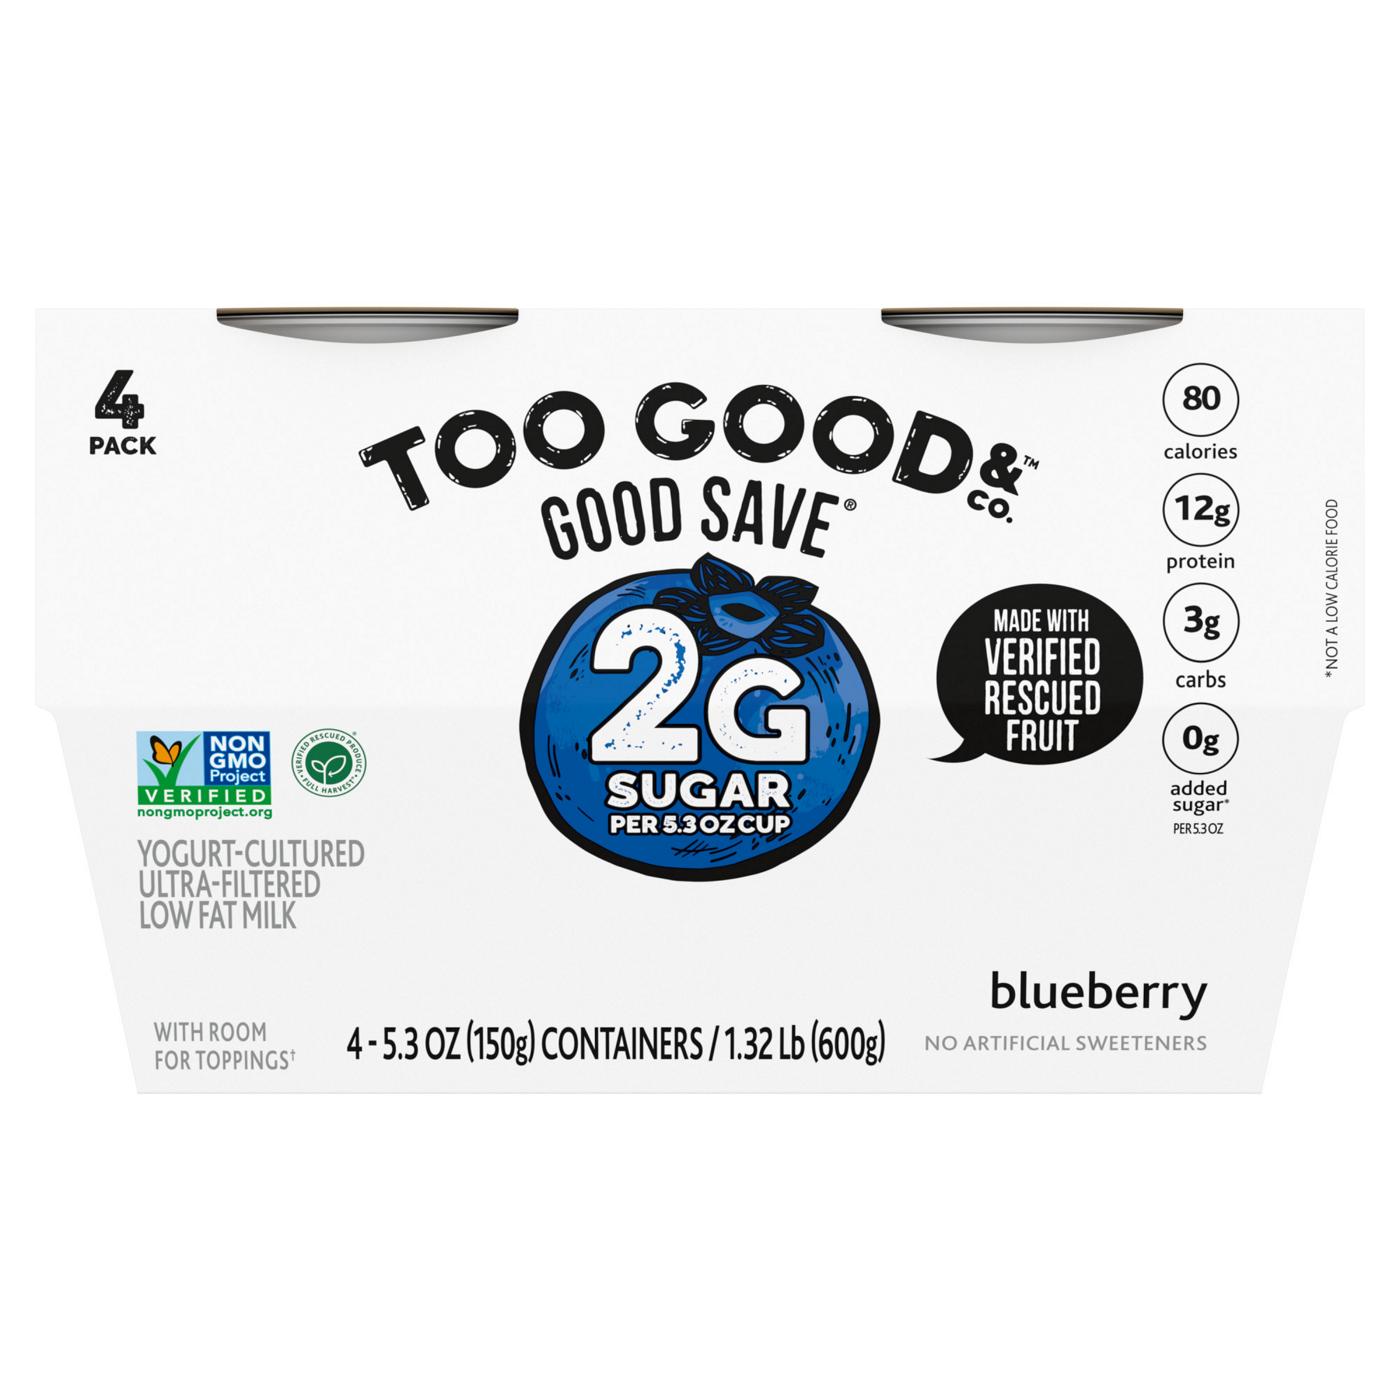 Too Good & Co. Blueberry Flavored Lower Sugar Greek Yogurt; image 1 of 2